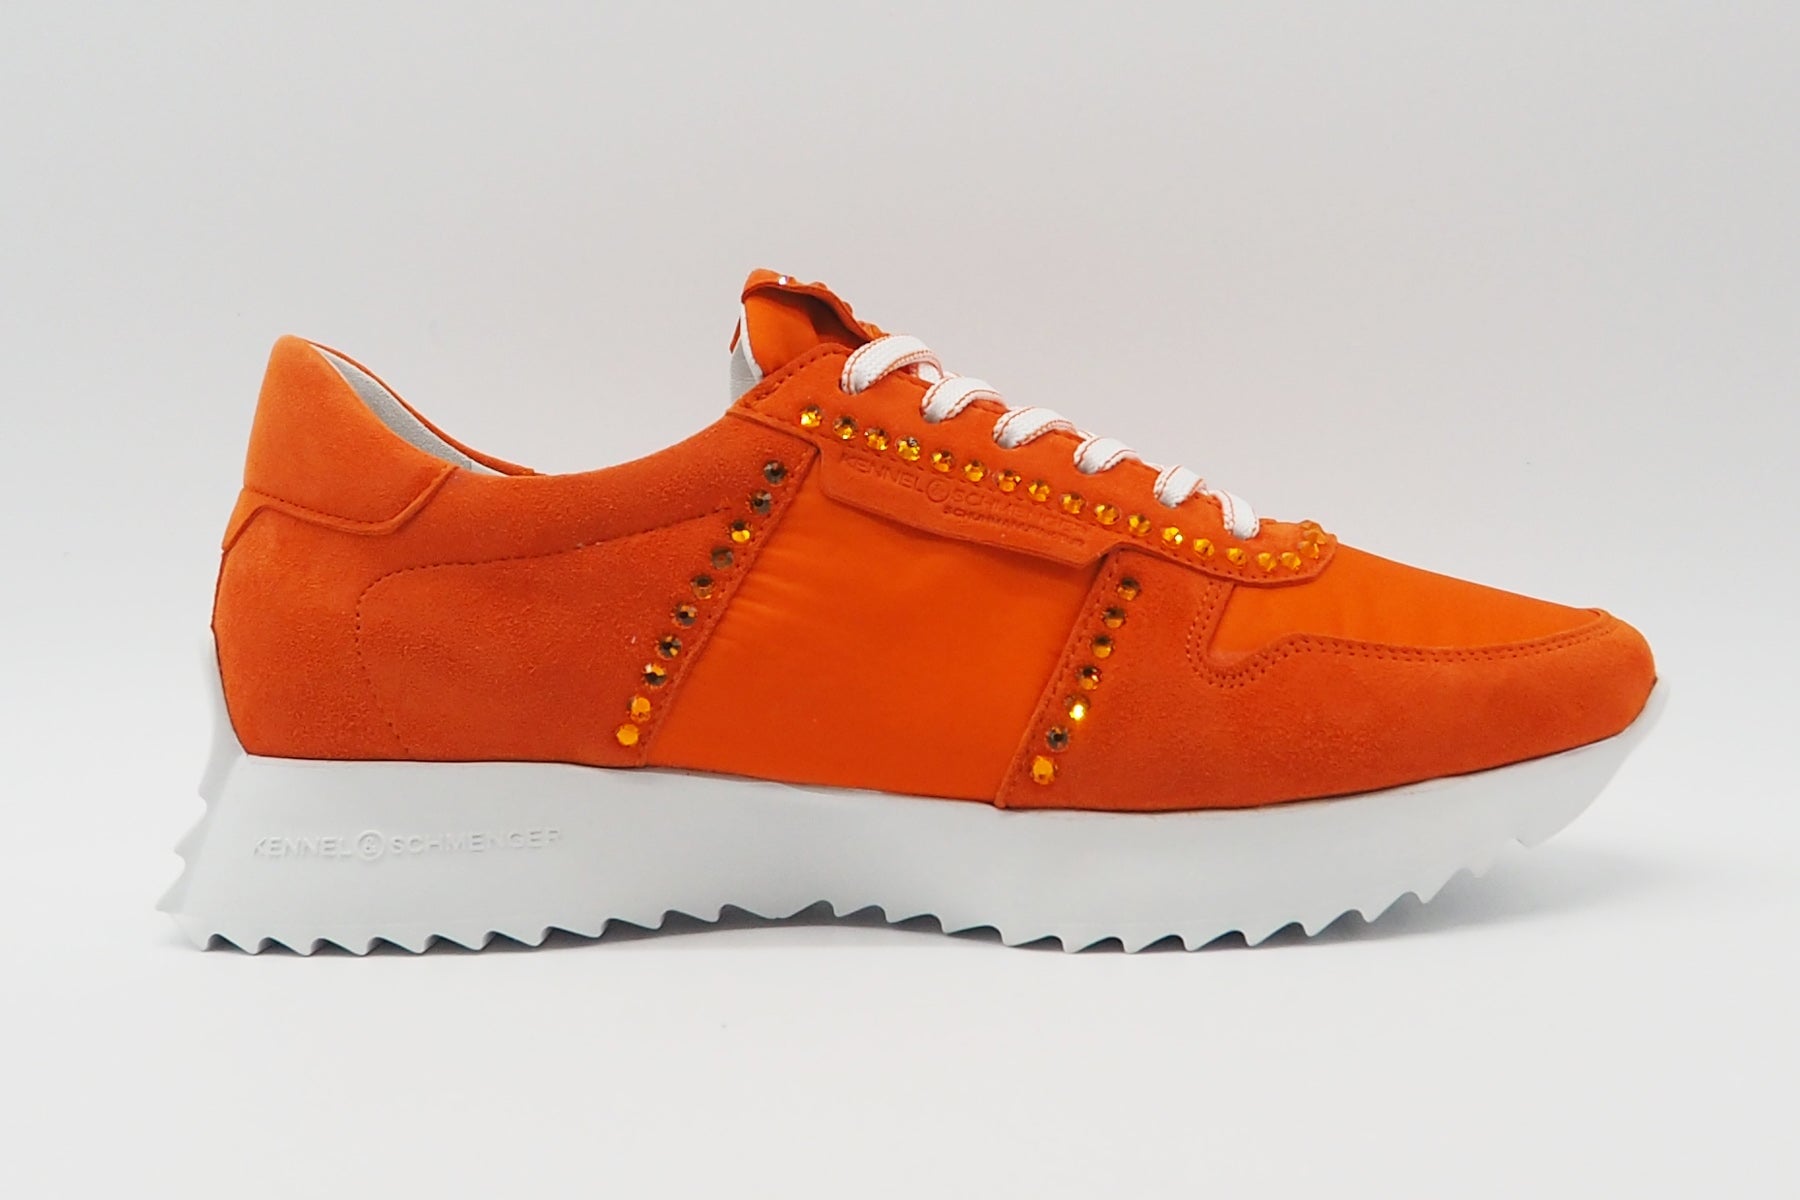 Damen Sneaker aus Veloursleder & Nylon in Orange mit Strass - Absatz 3,5cm - PULL Damen Sneaker Kennel & Schmenger 